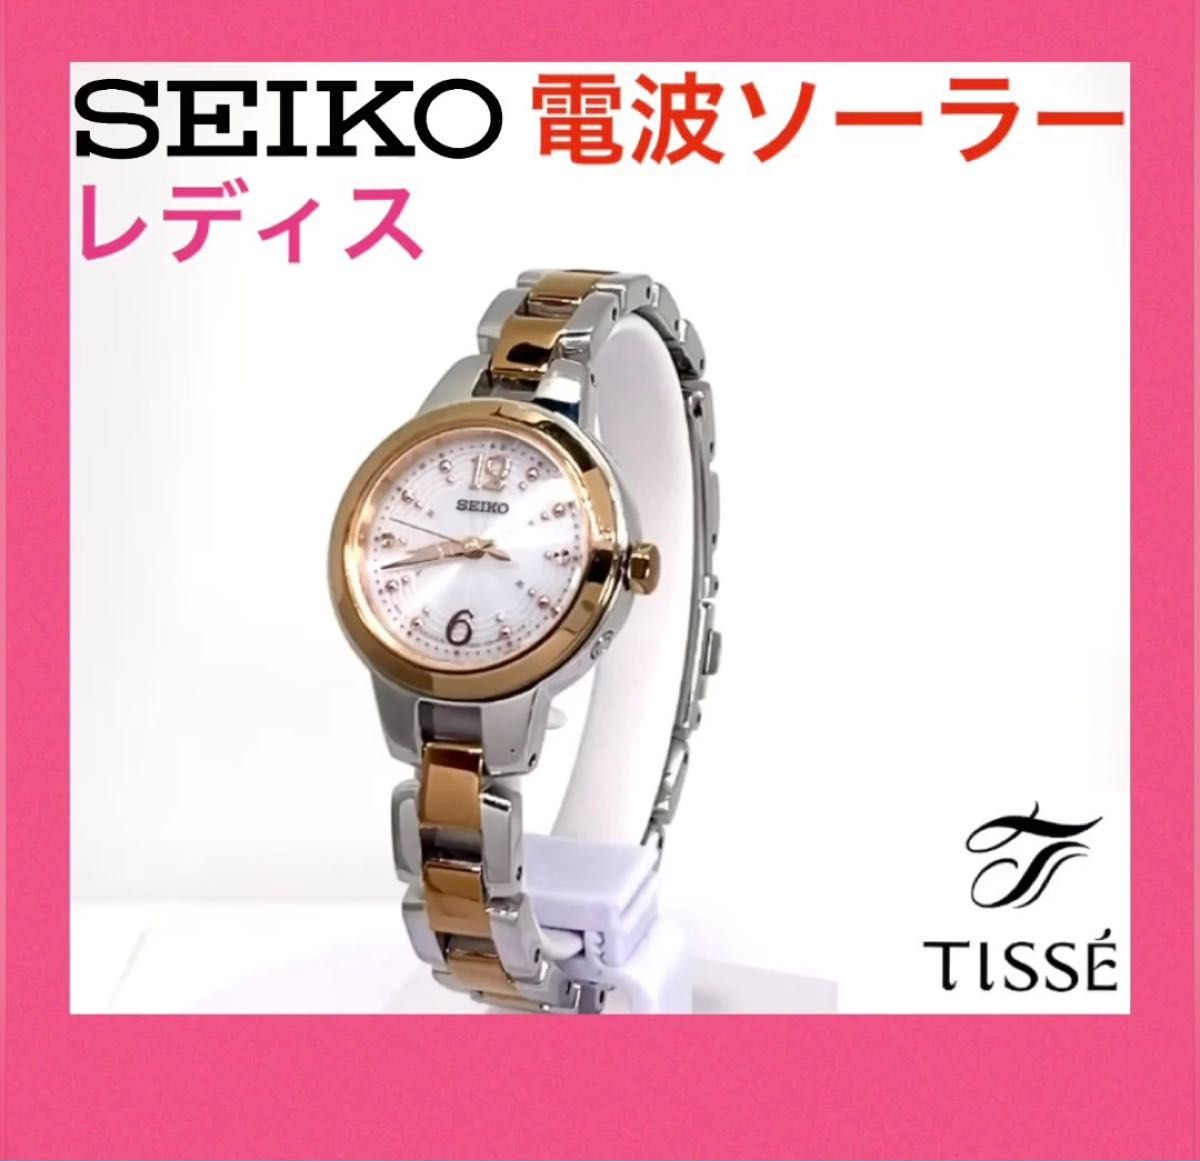 SEIKO☆セイコー☆TISSE☆ティセ☆電波ソーラー☆腕時計☆レディス☆軽量☆ピンク文字盤